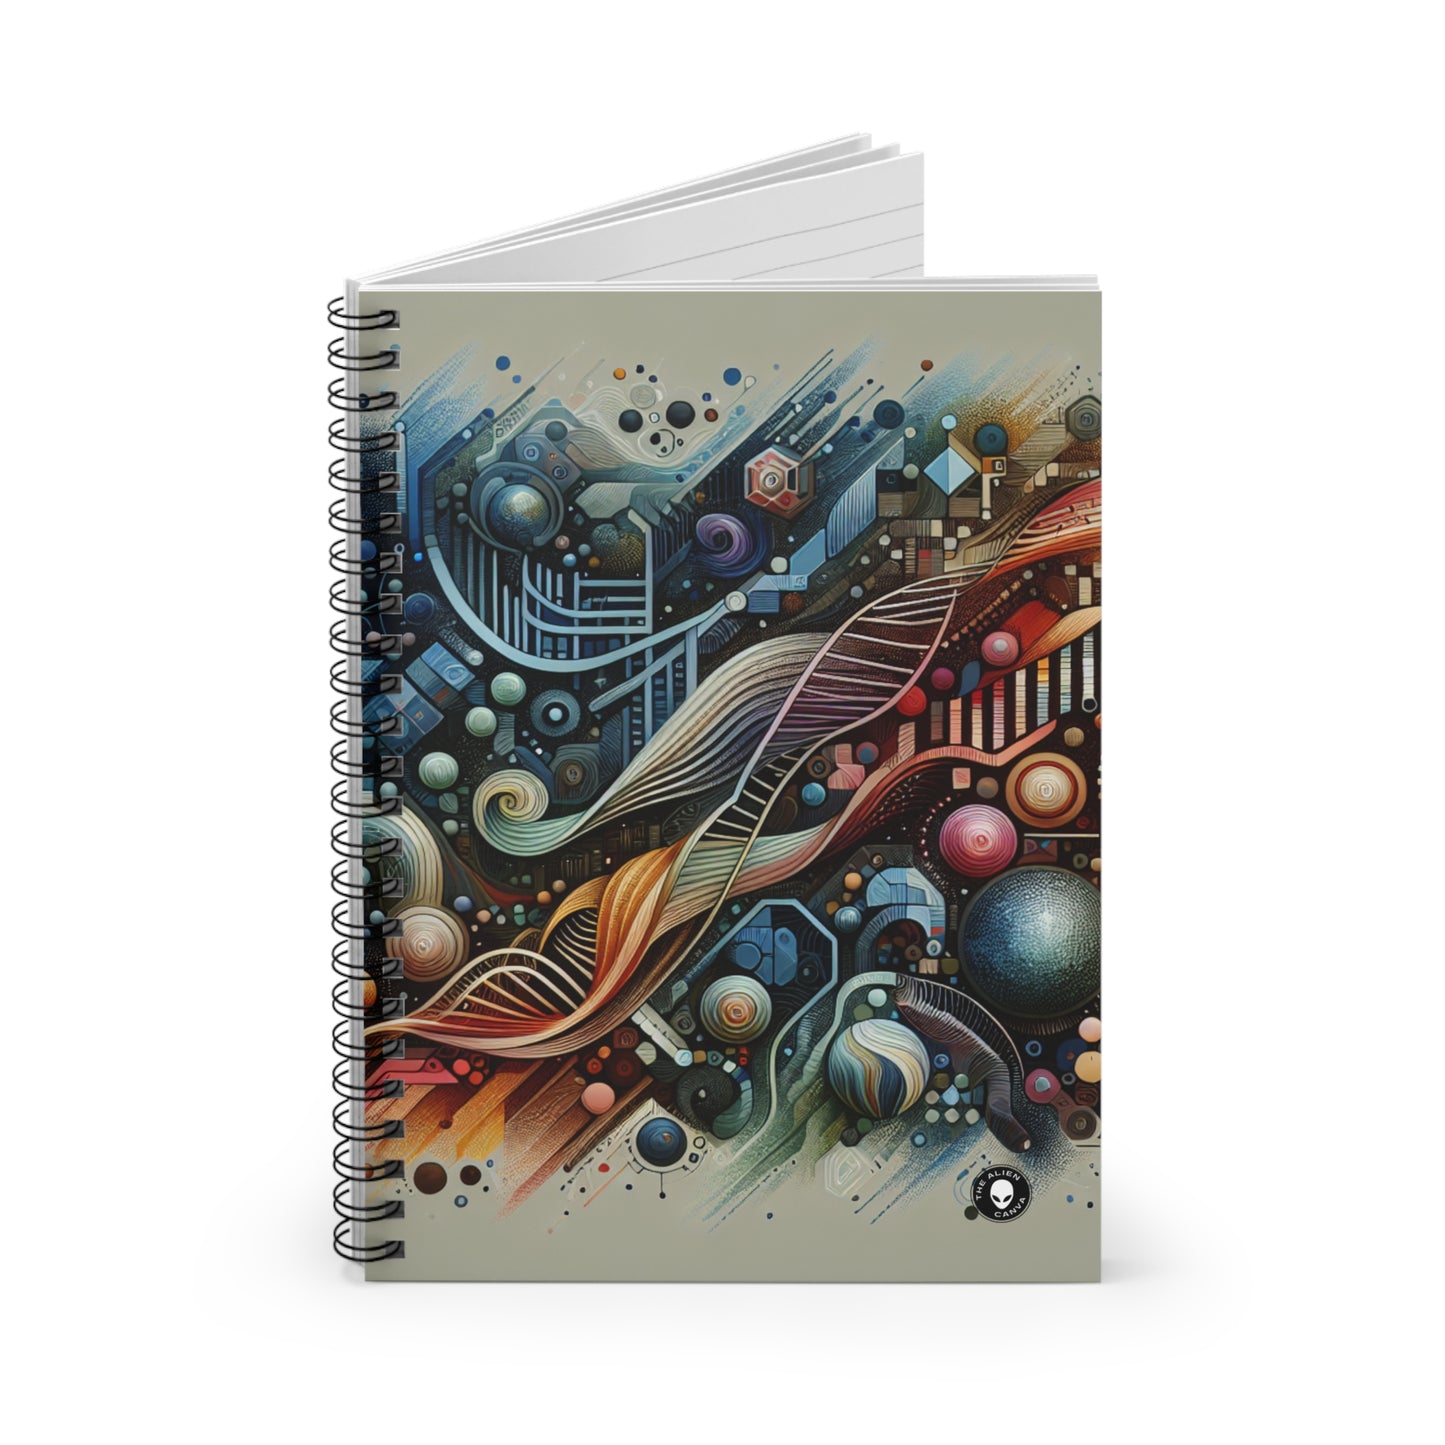 "Bio-Futurism: Butterfly Wing Inspired Art" - The Alien Spiral Notebook (Ruled Line) Bio Art